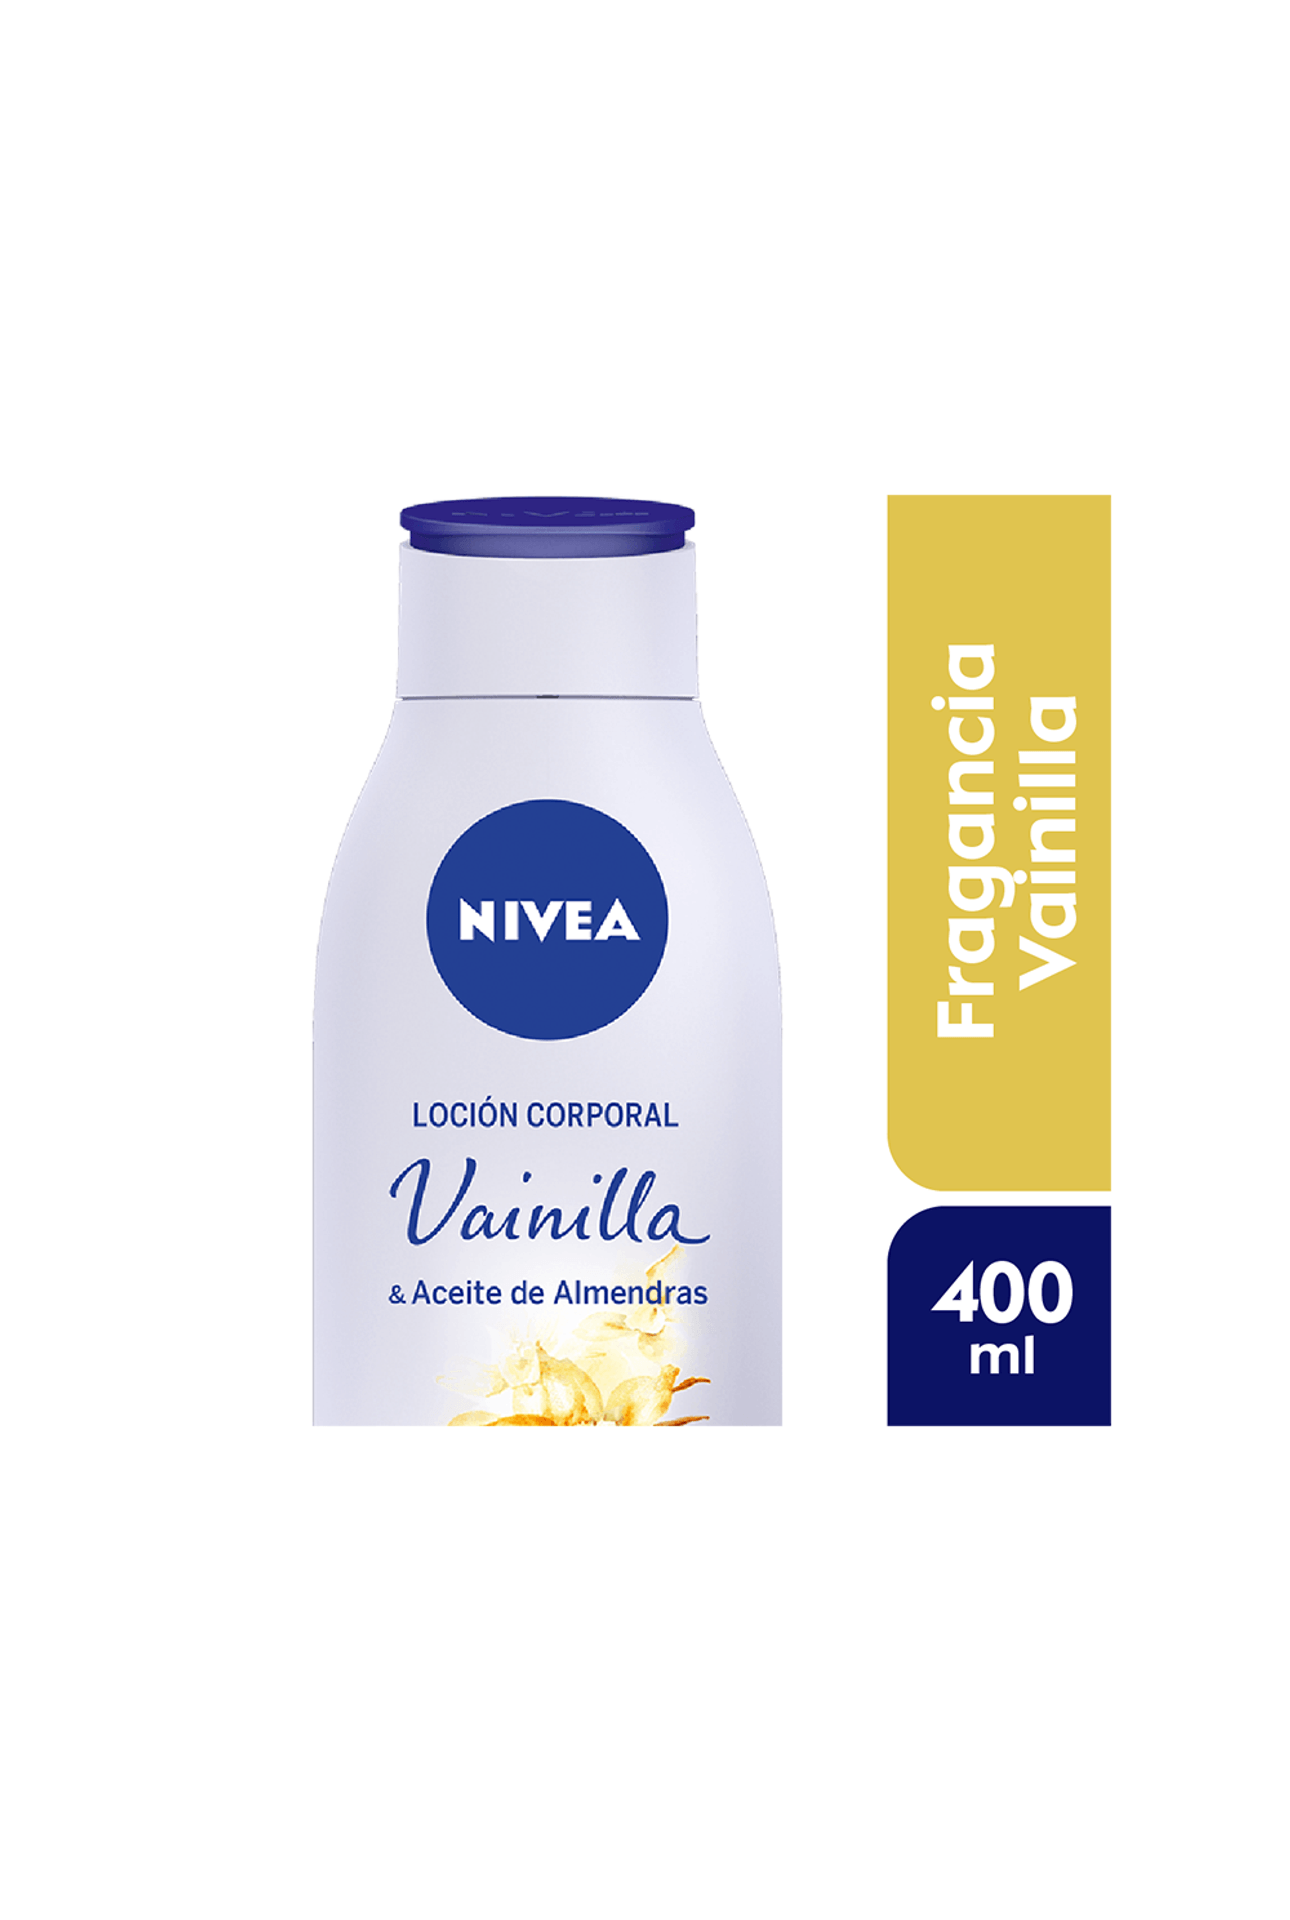 Nivea-Crema-Corporal-Nivea-Vainilla-x-400-ml-4005900399946_img1